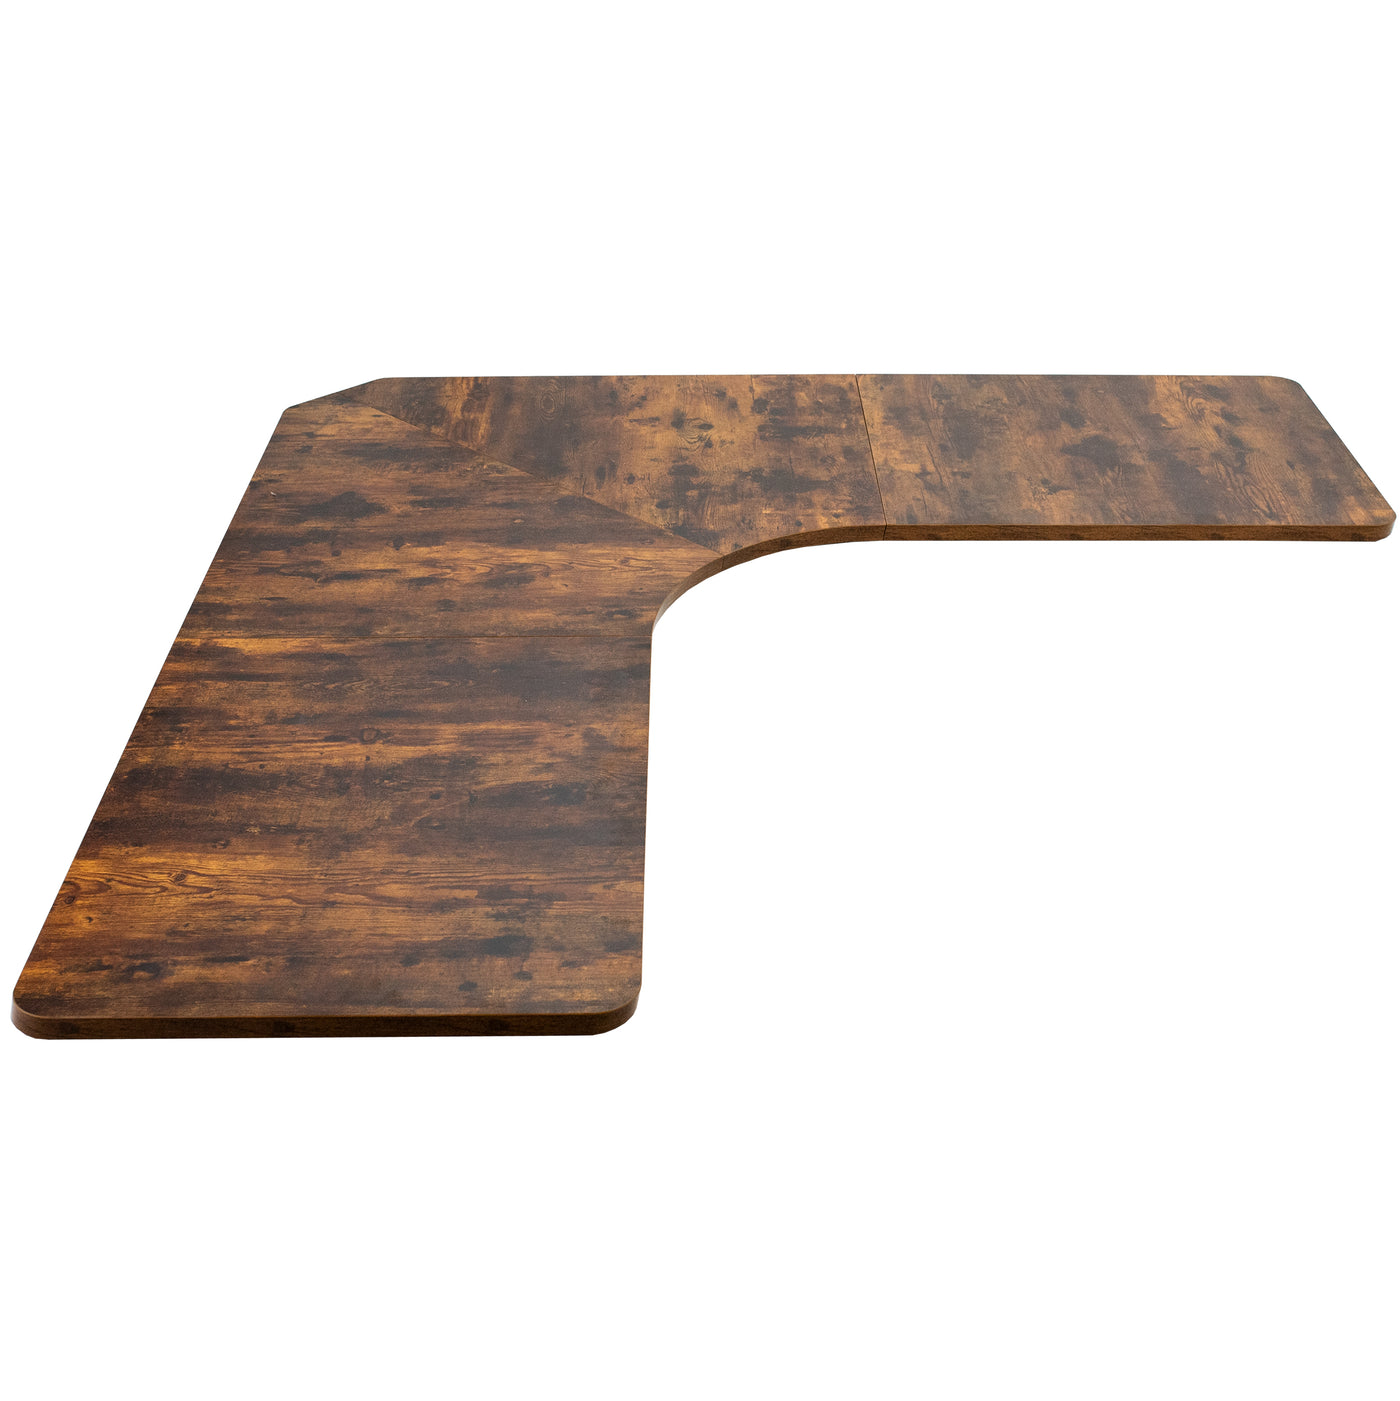 Sturdy vintage curved corner table top.